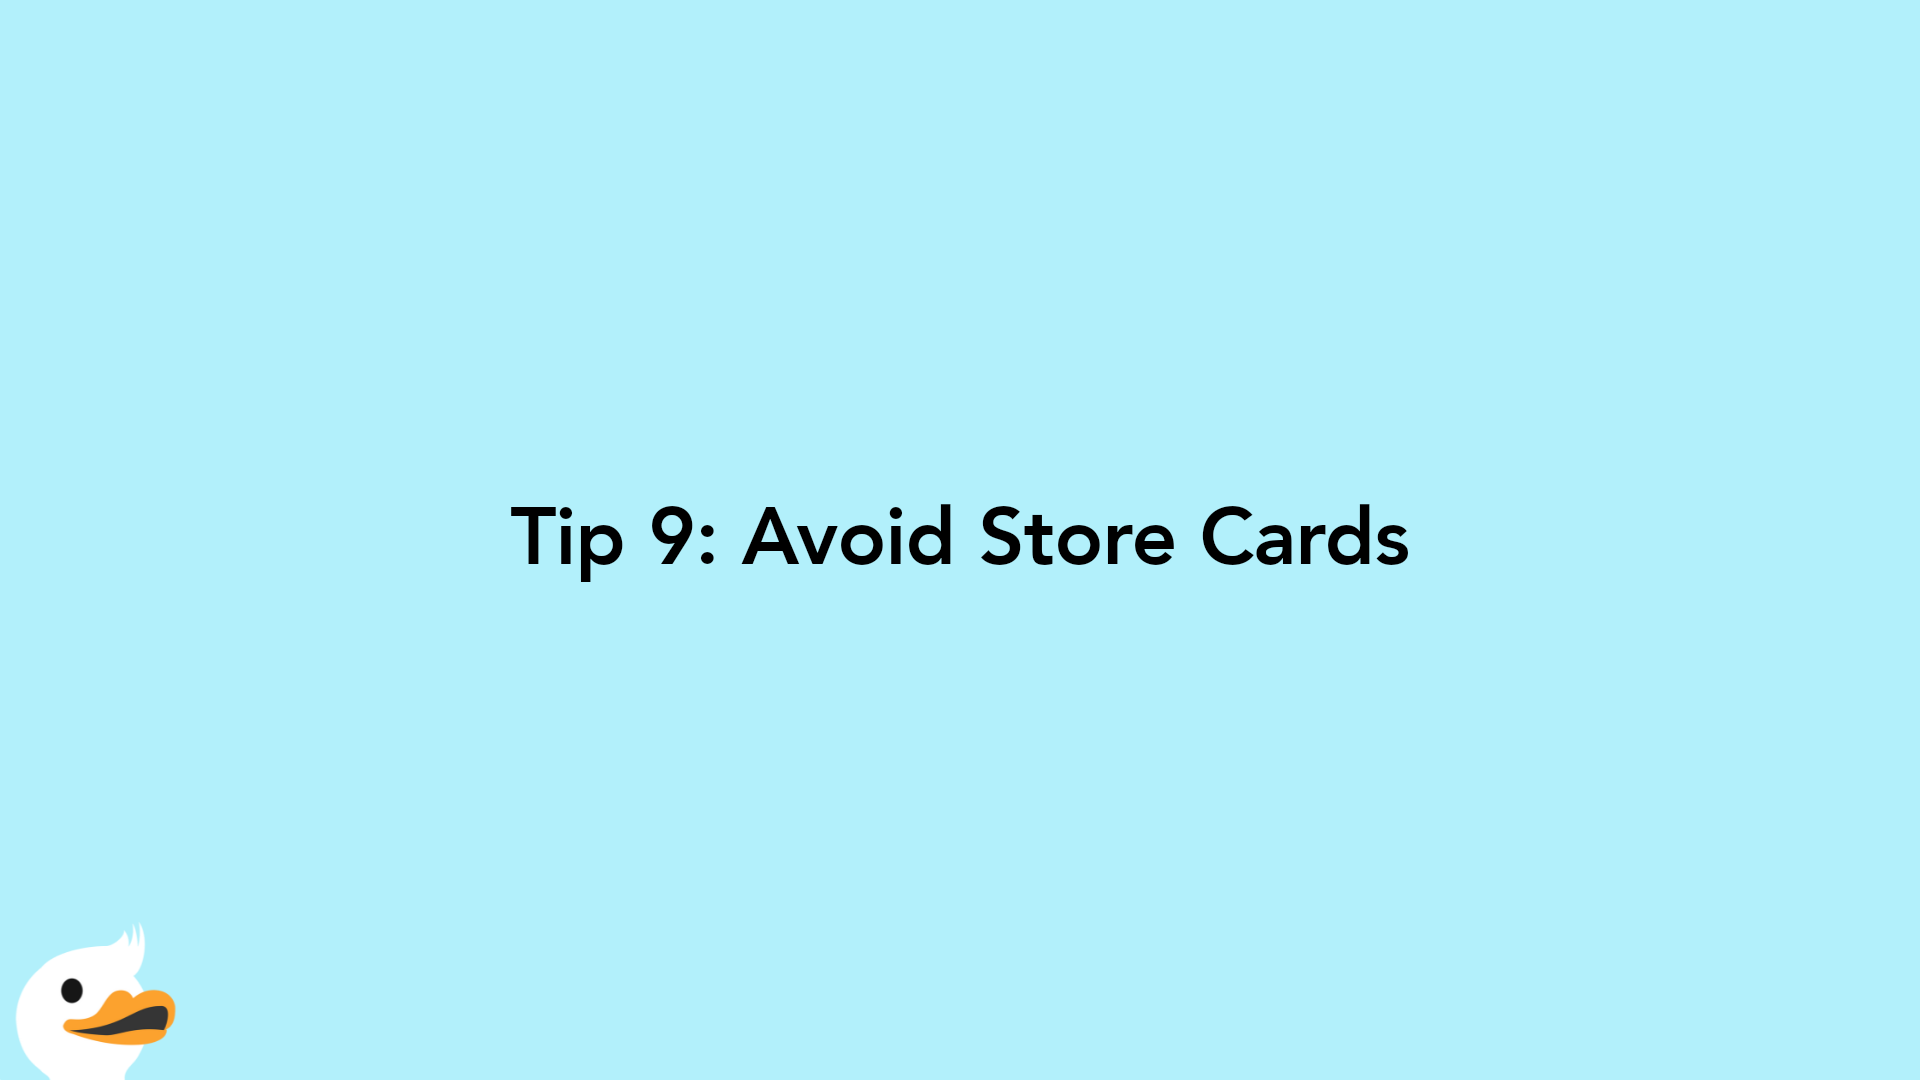 Tip 9: Avoid Store Cards